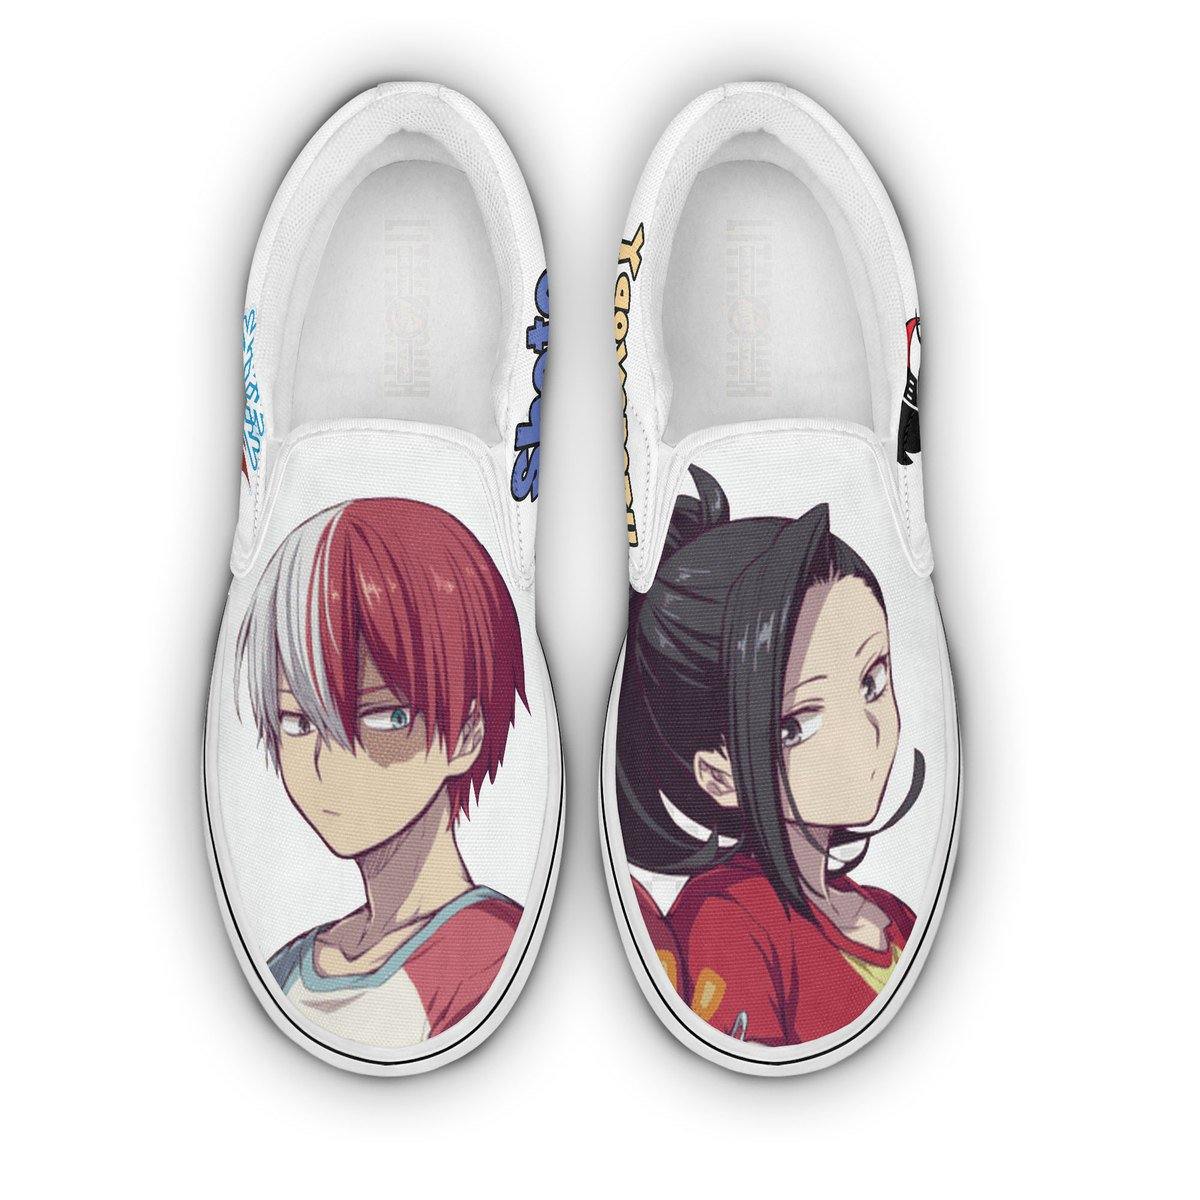 MHA Shoto and Yaoyorozu Shoes Custom Anime Classic Slip-On Sneakers